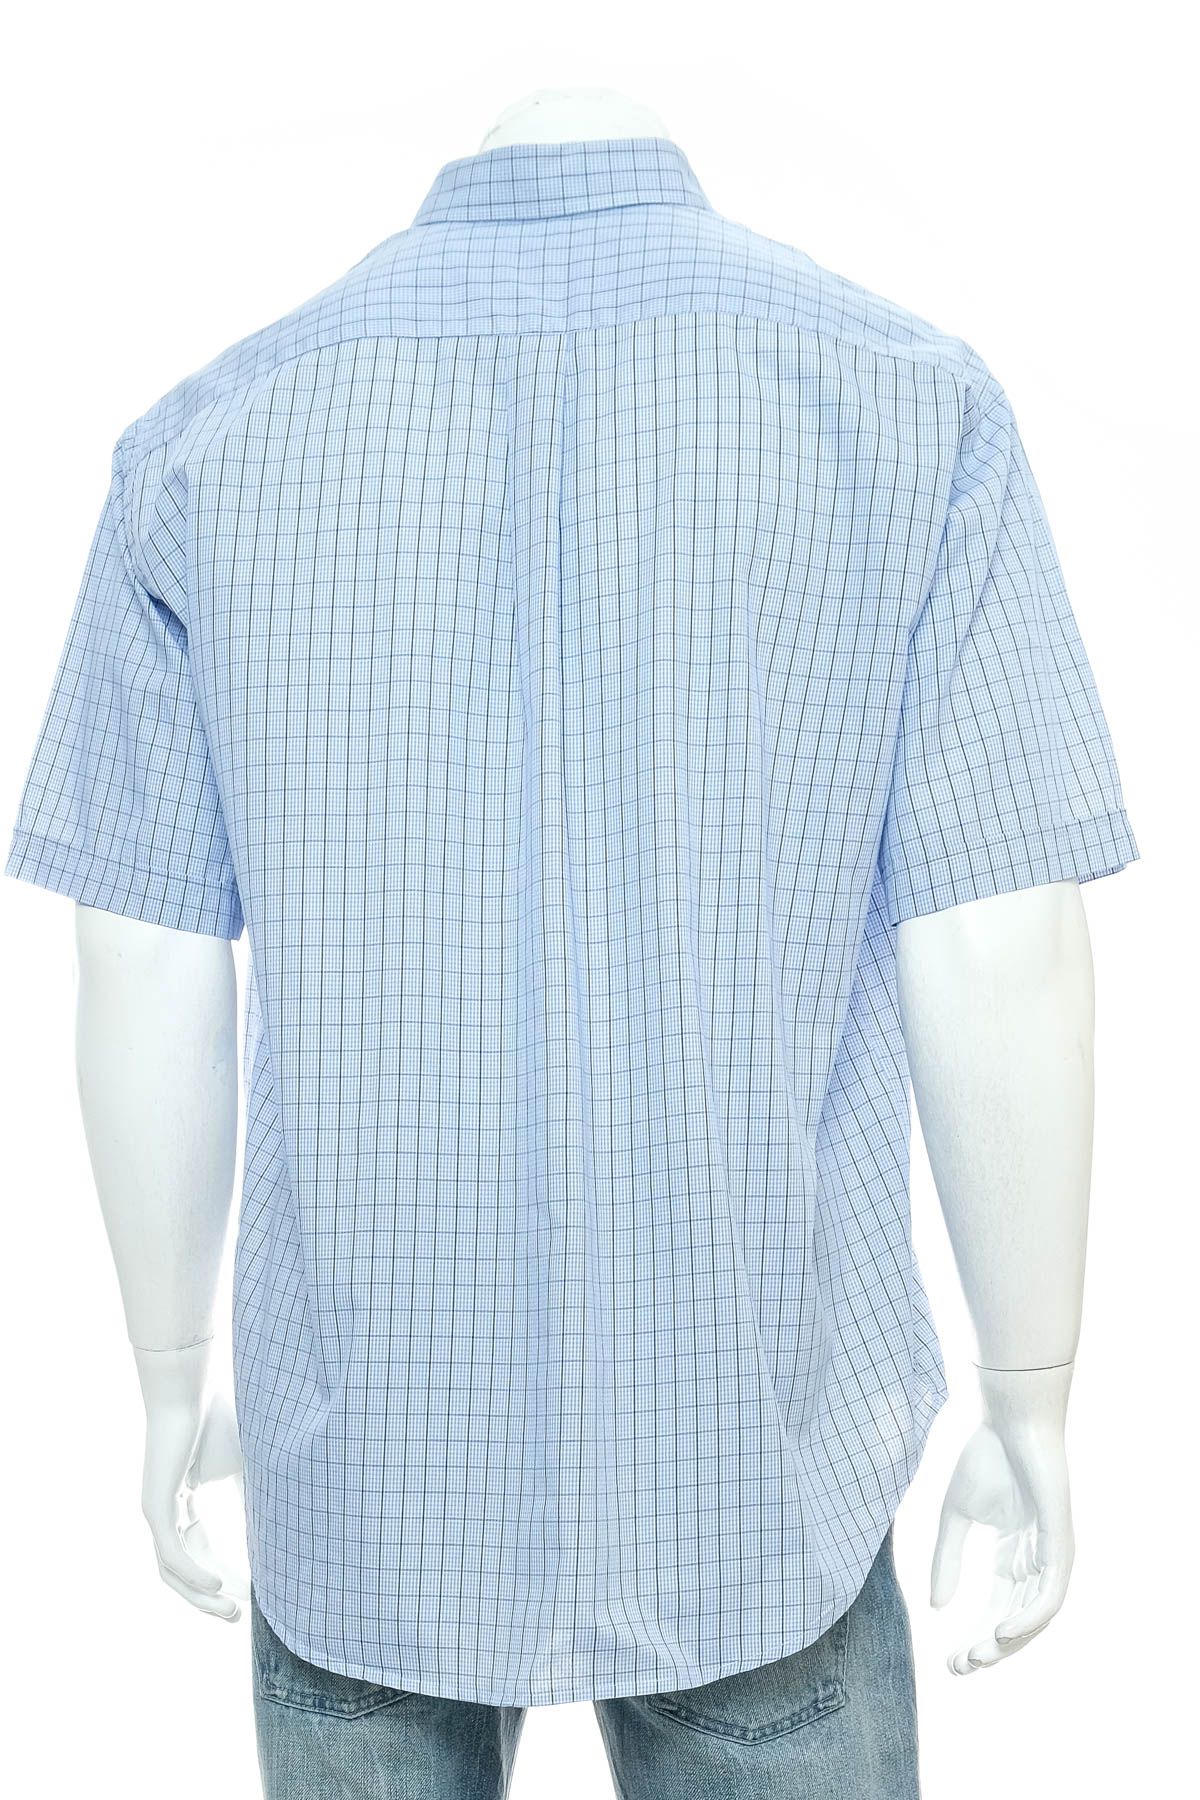 Men's shirt - Cyrillus - 1